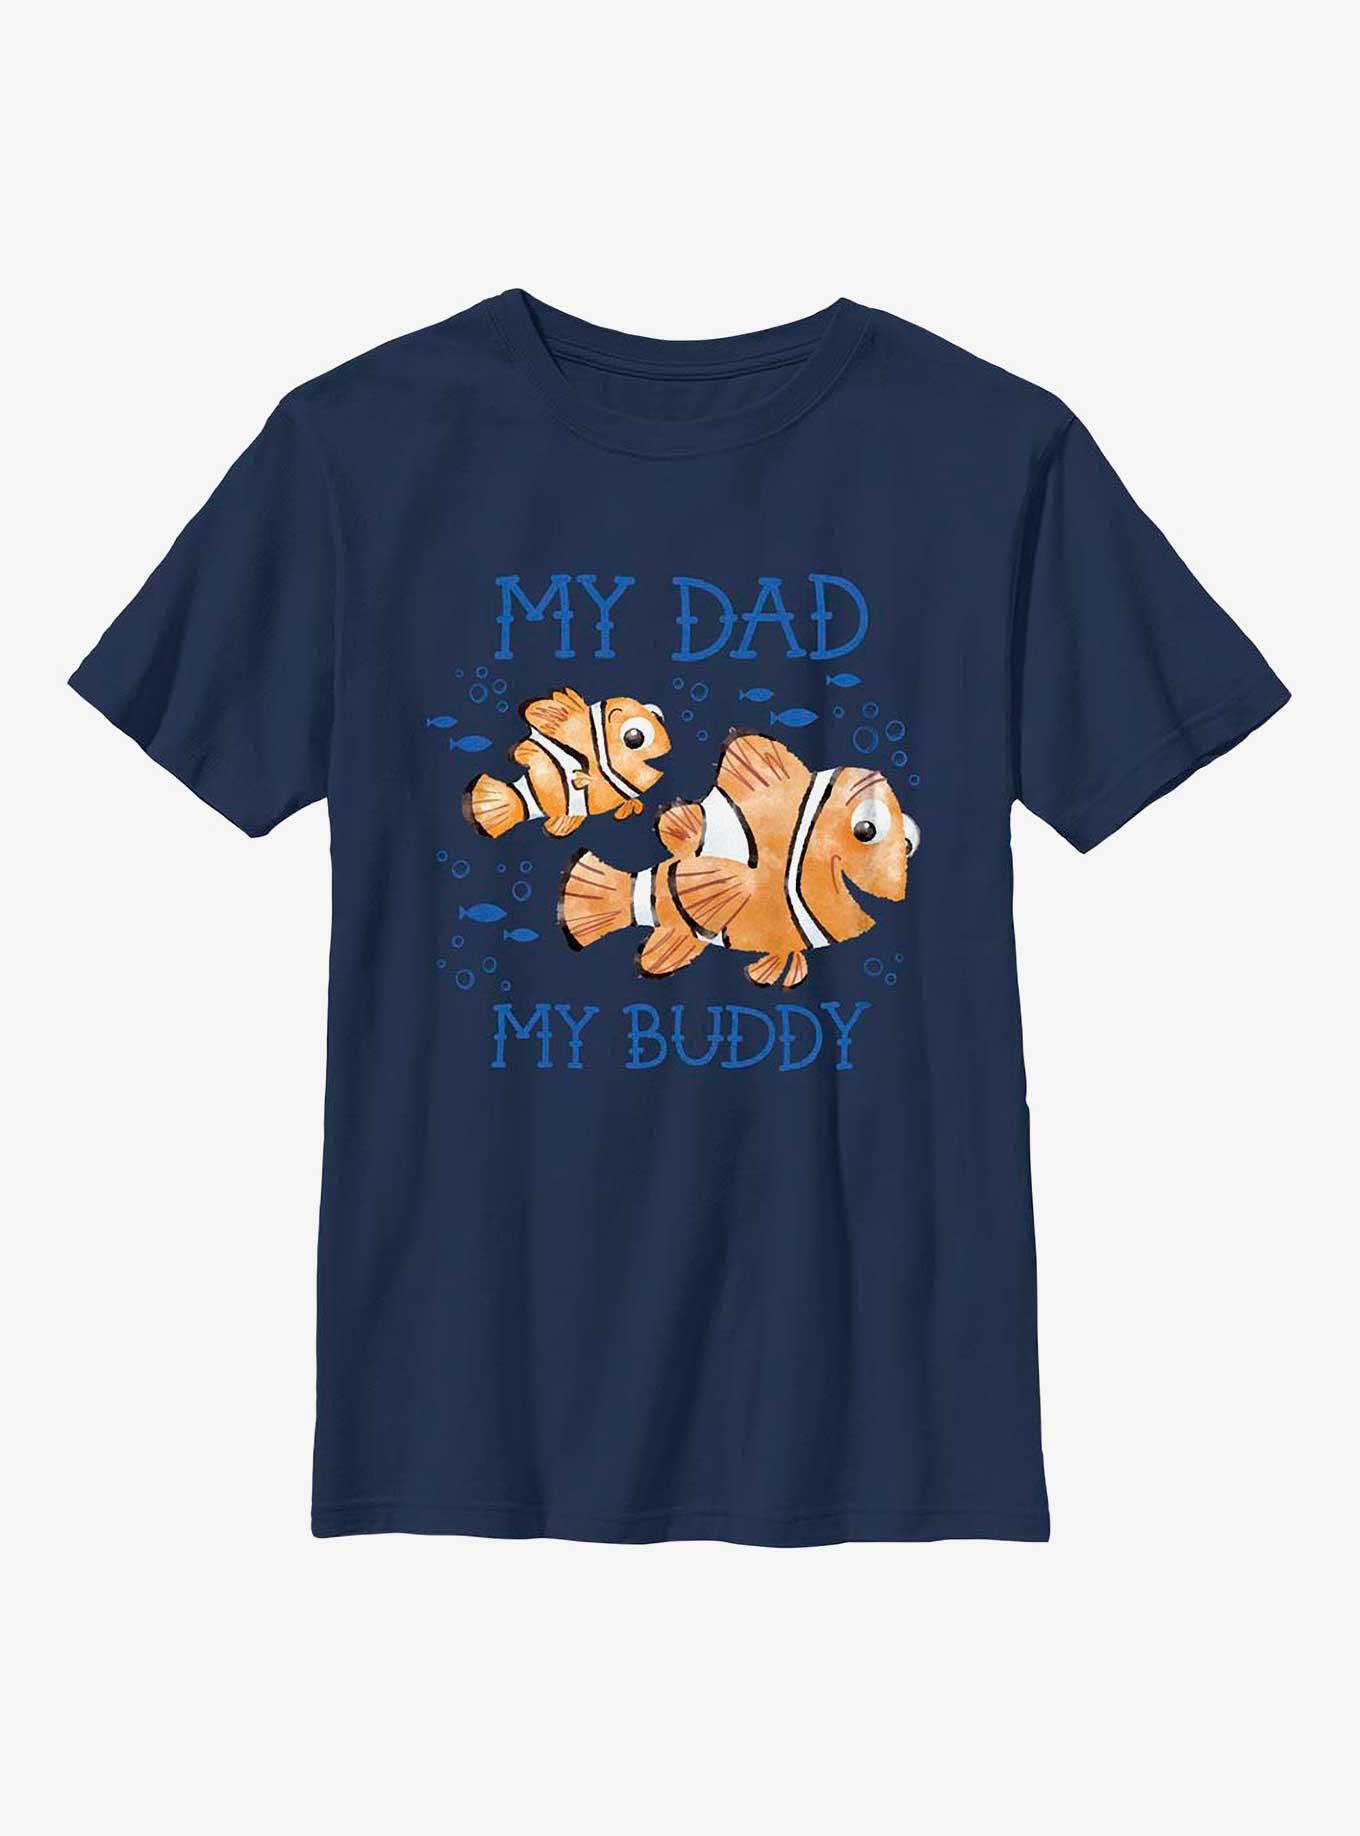 Disney Pixar Finding Nemo My Dad My Buddy Youth T-Shirt - BLUE